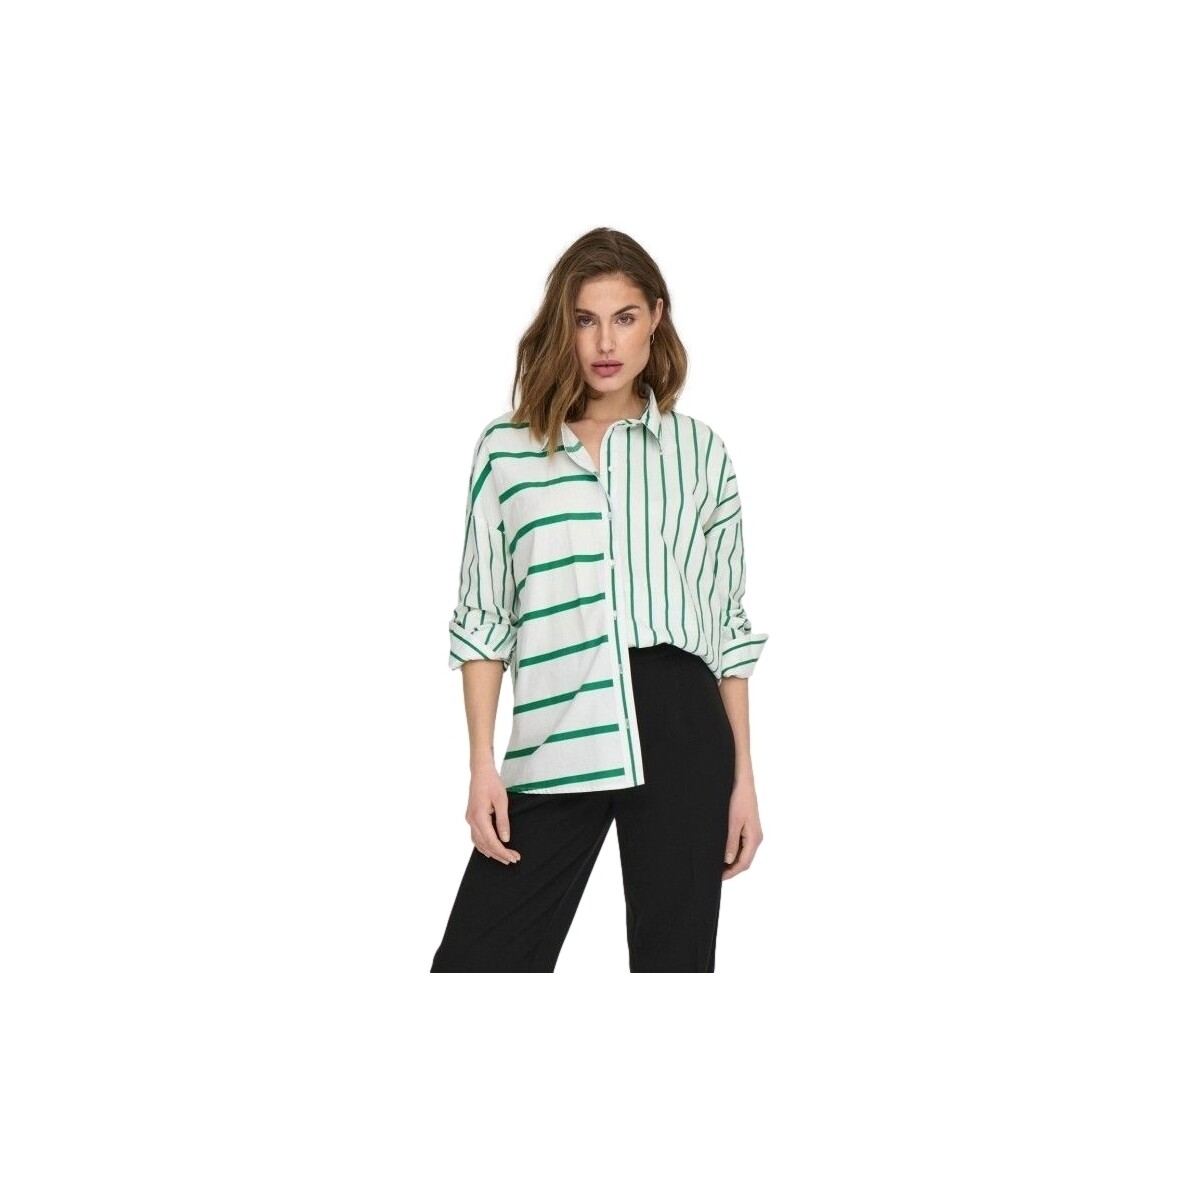 Vêtements Femme Tops / Blouses Only Shirt Nina Lora L/S - Creme/Amazon Vert